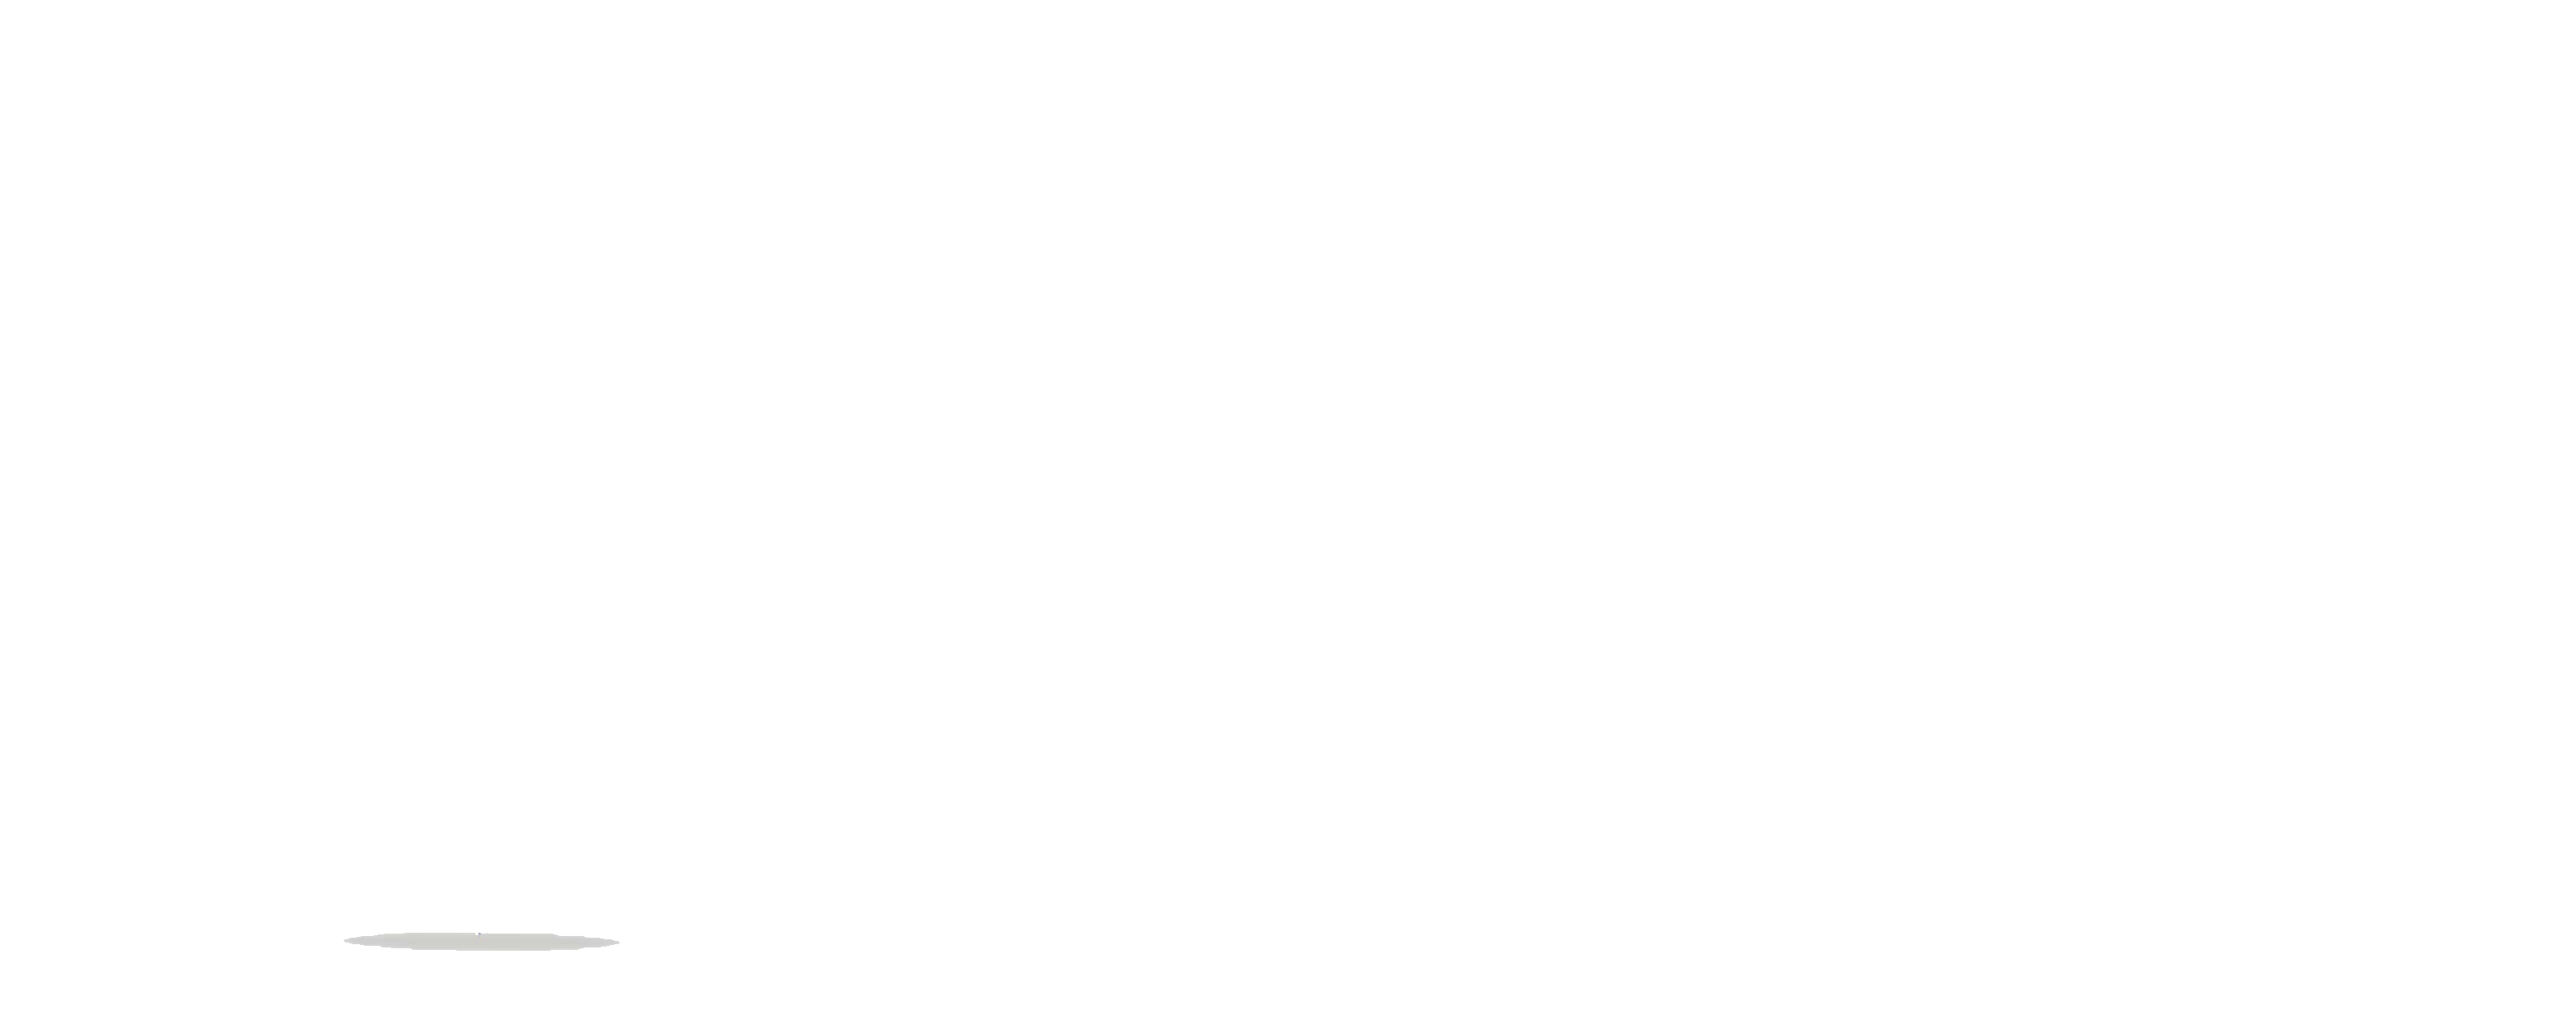 Total Transport Corporation